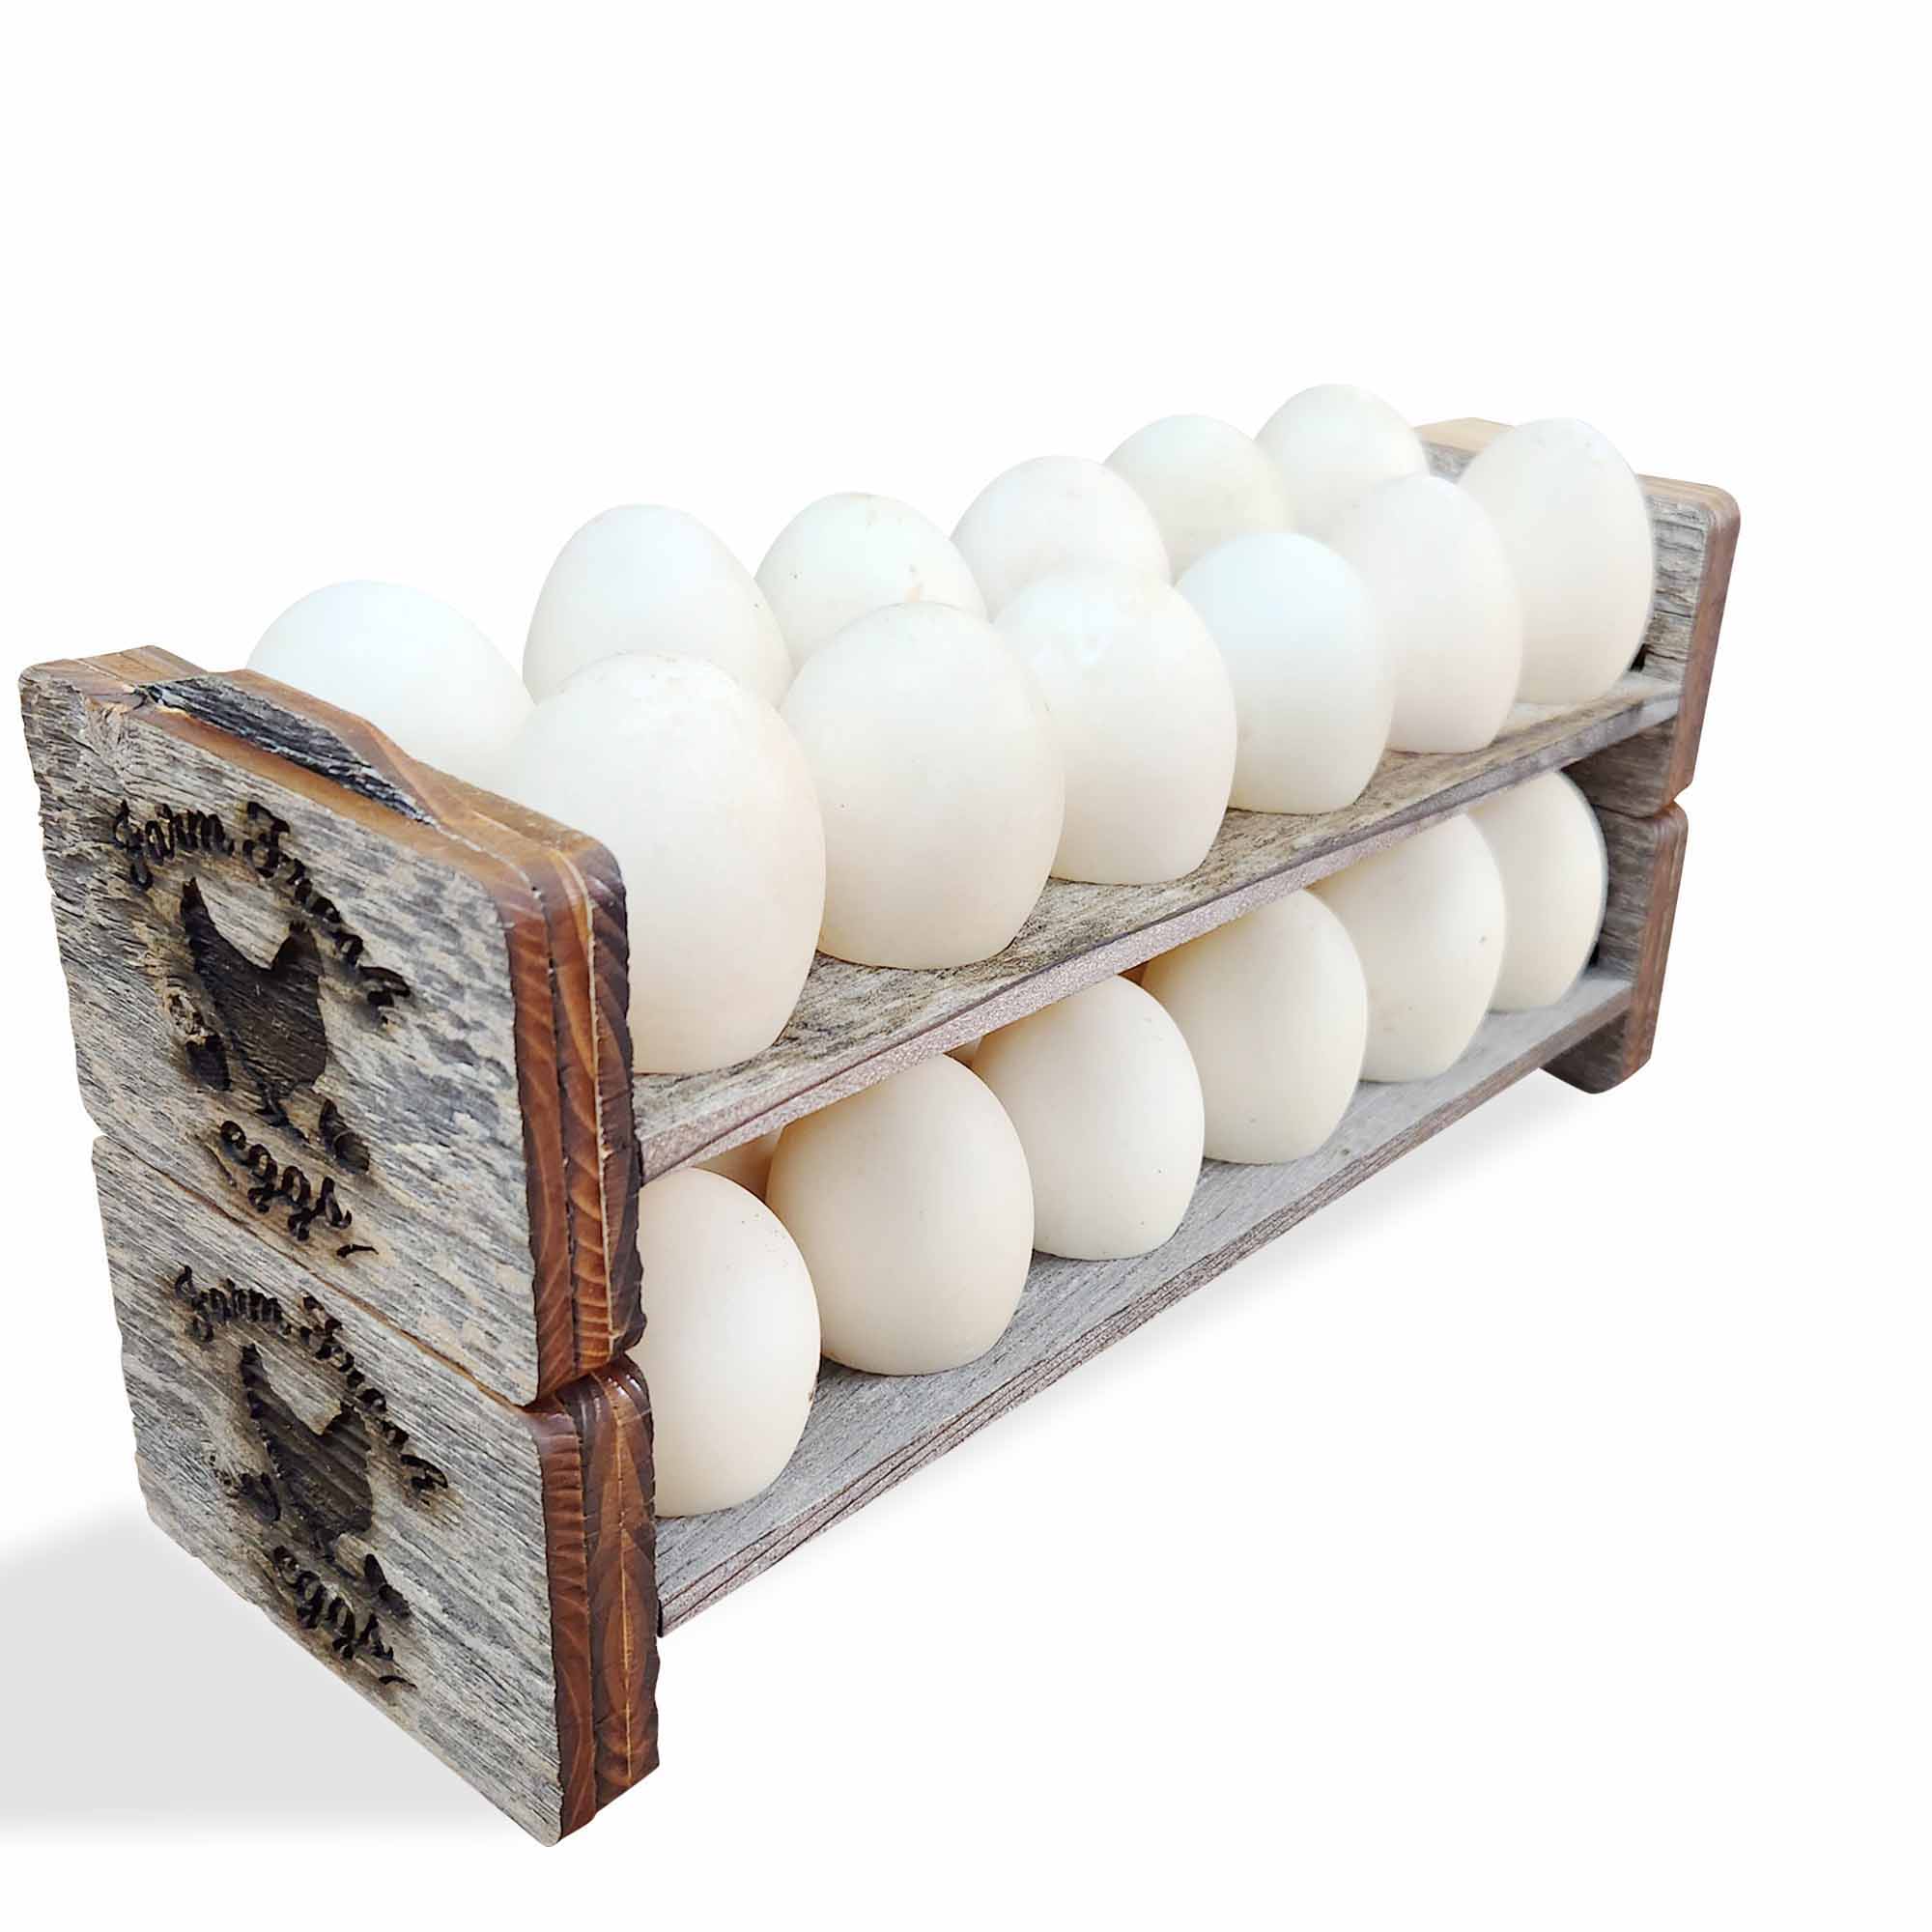  Wooden Egg Holder Countertop Egg Storage Trays Hold